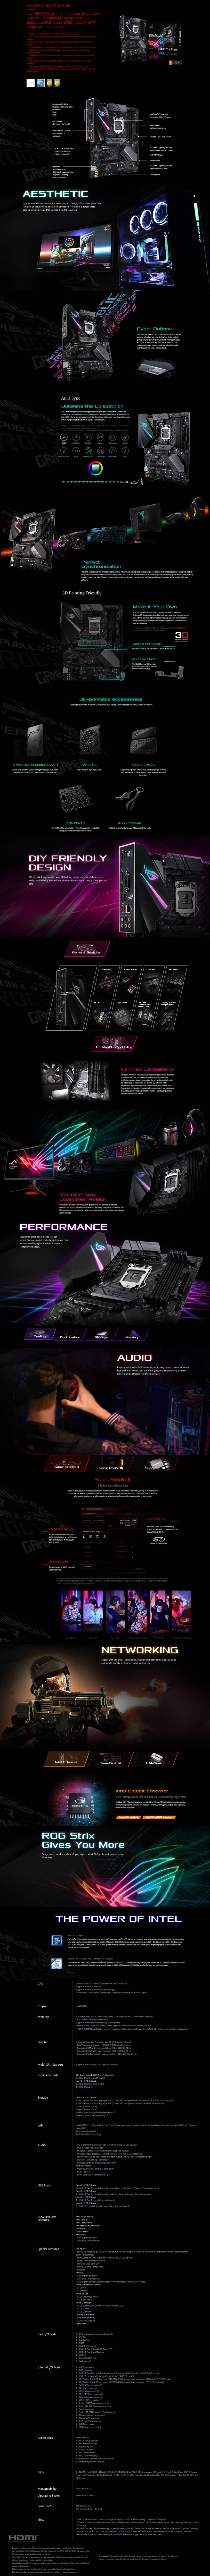 Buy Online Asus ROG STRIX H370-F GAMING 8th Gen Intel Motherboard